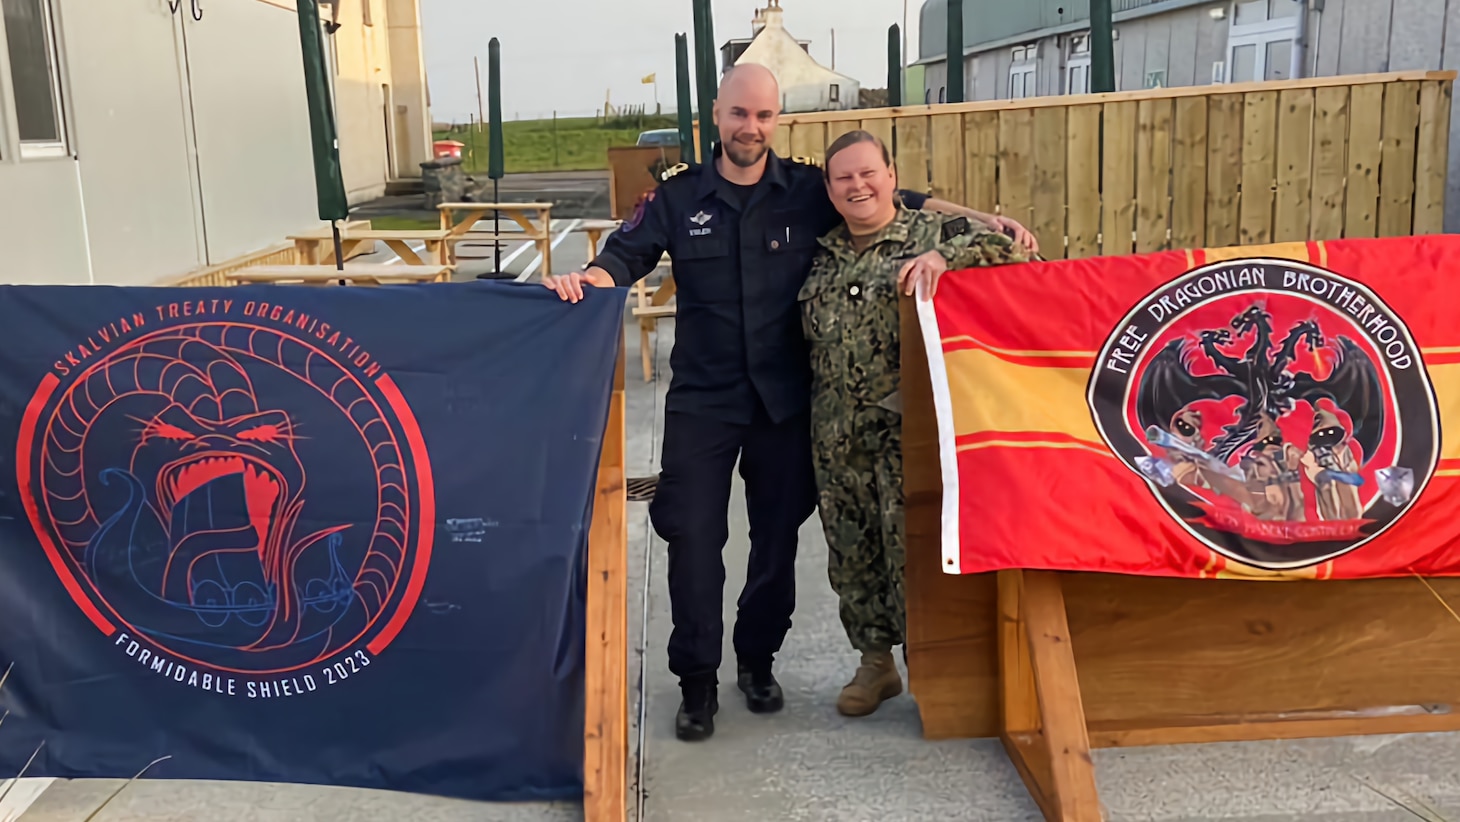 Royal Norwegian Navy Lt. Cmdr. Steinar Valen, the Formidable Shield (FS) mission director in Andøya, Norway, and U.S. Navy Lt. Cmdr. Alisha Hamilton, the overall FS mission director, pose for a photo during FS 2023 in Hebrides, Scotland.